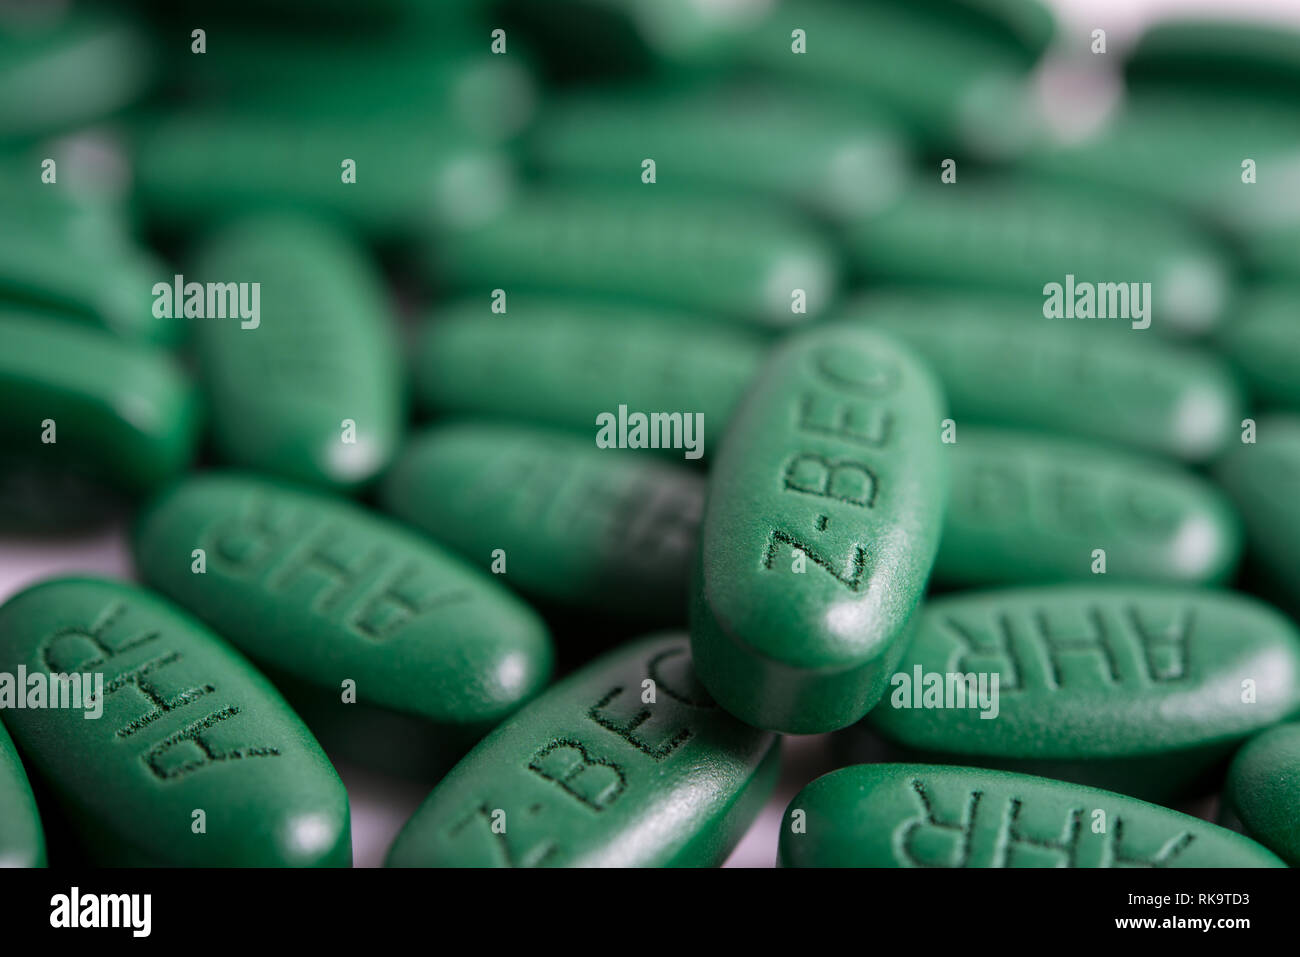 Grüne tabletten Vitamine, Nahrungsergänzungsmittel Pillen Stockfotografie -  Alamy